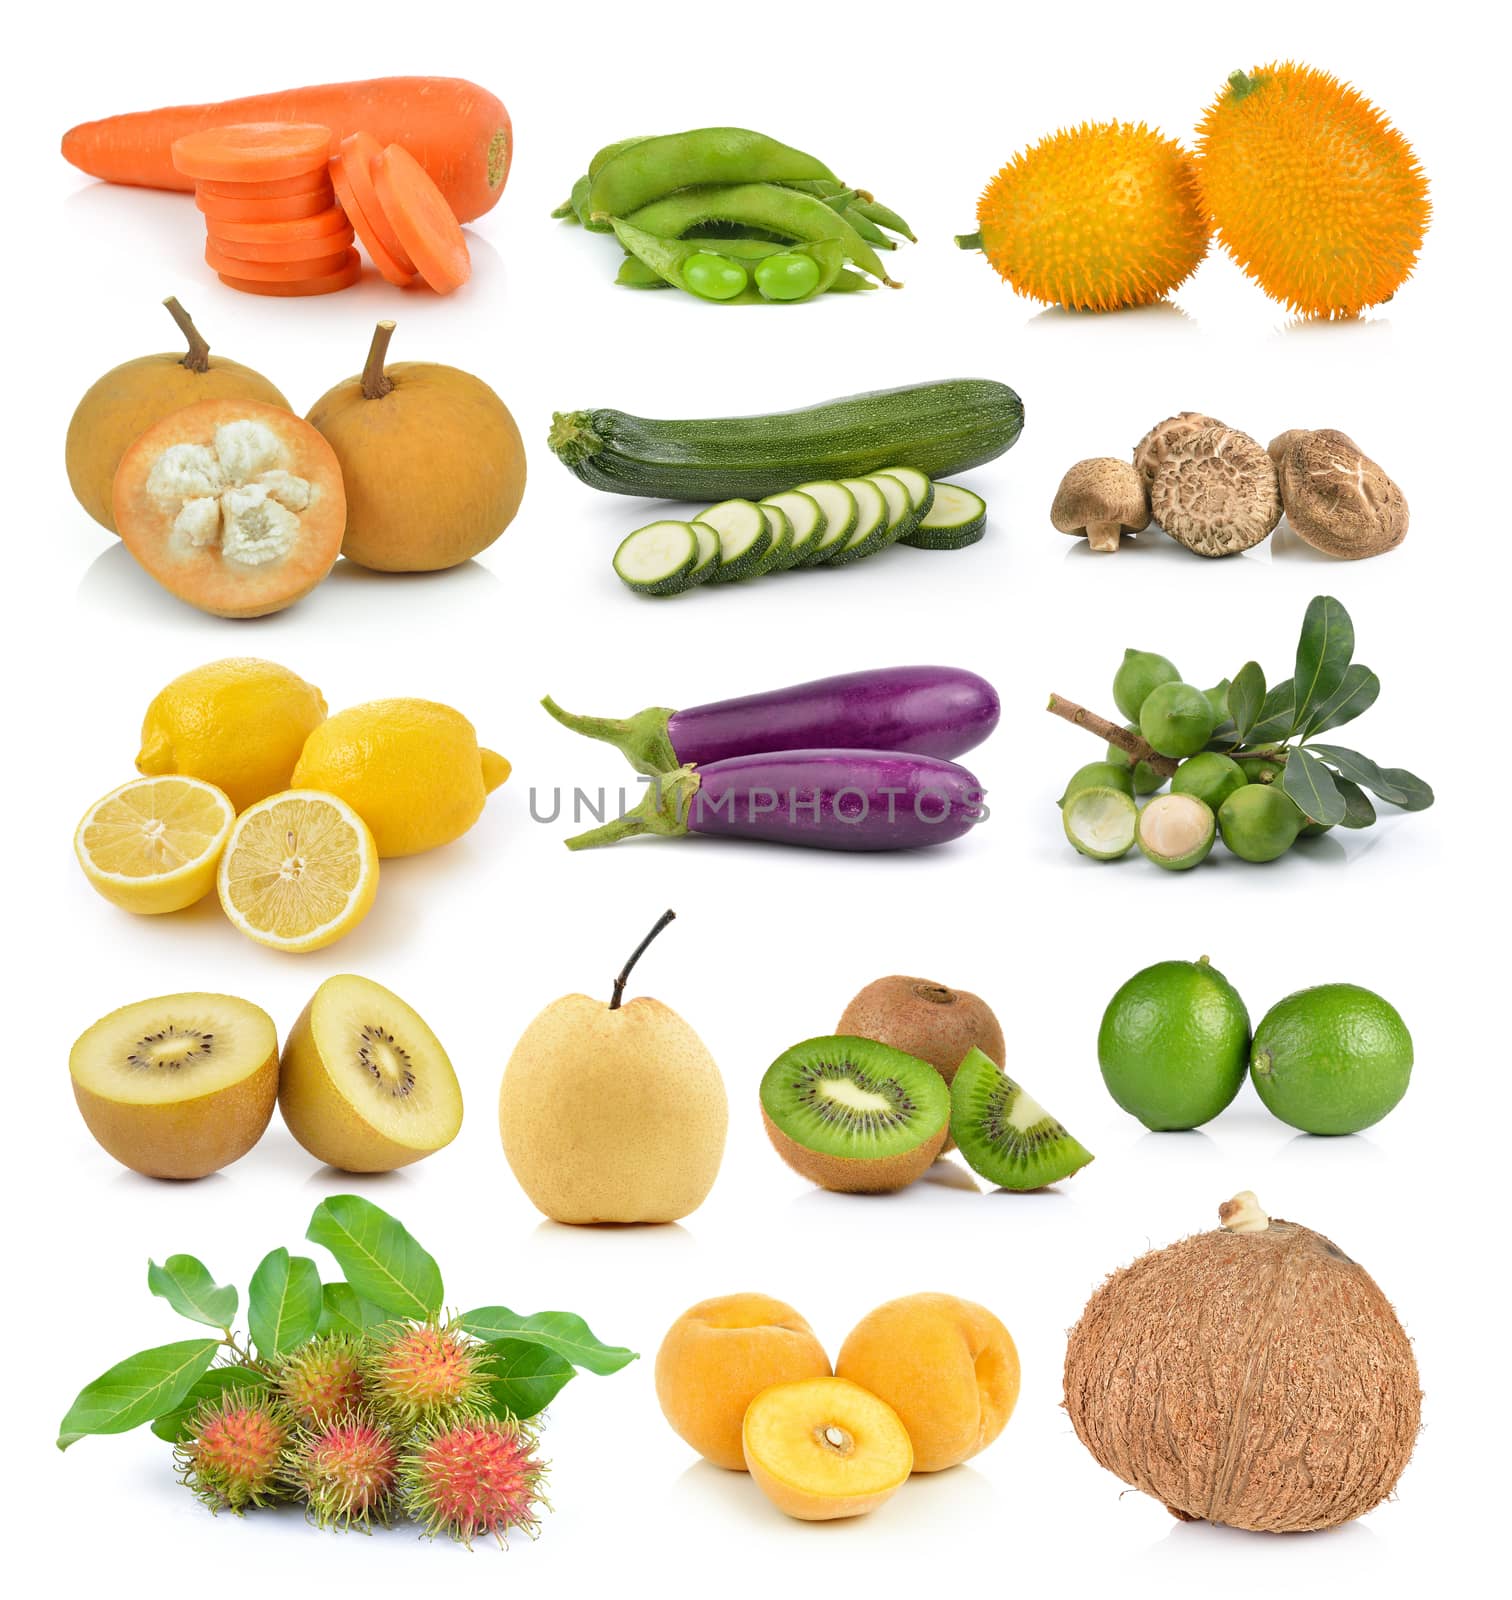 Santol, carrots, peas, mushrooms, zucchini, lemon macadamia, coconut, kiwi, persimmon fruit spread on white background